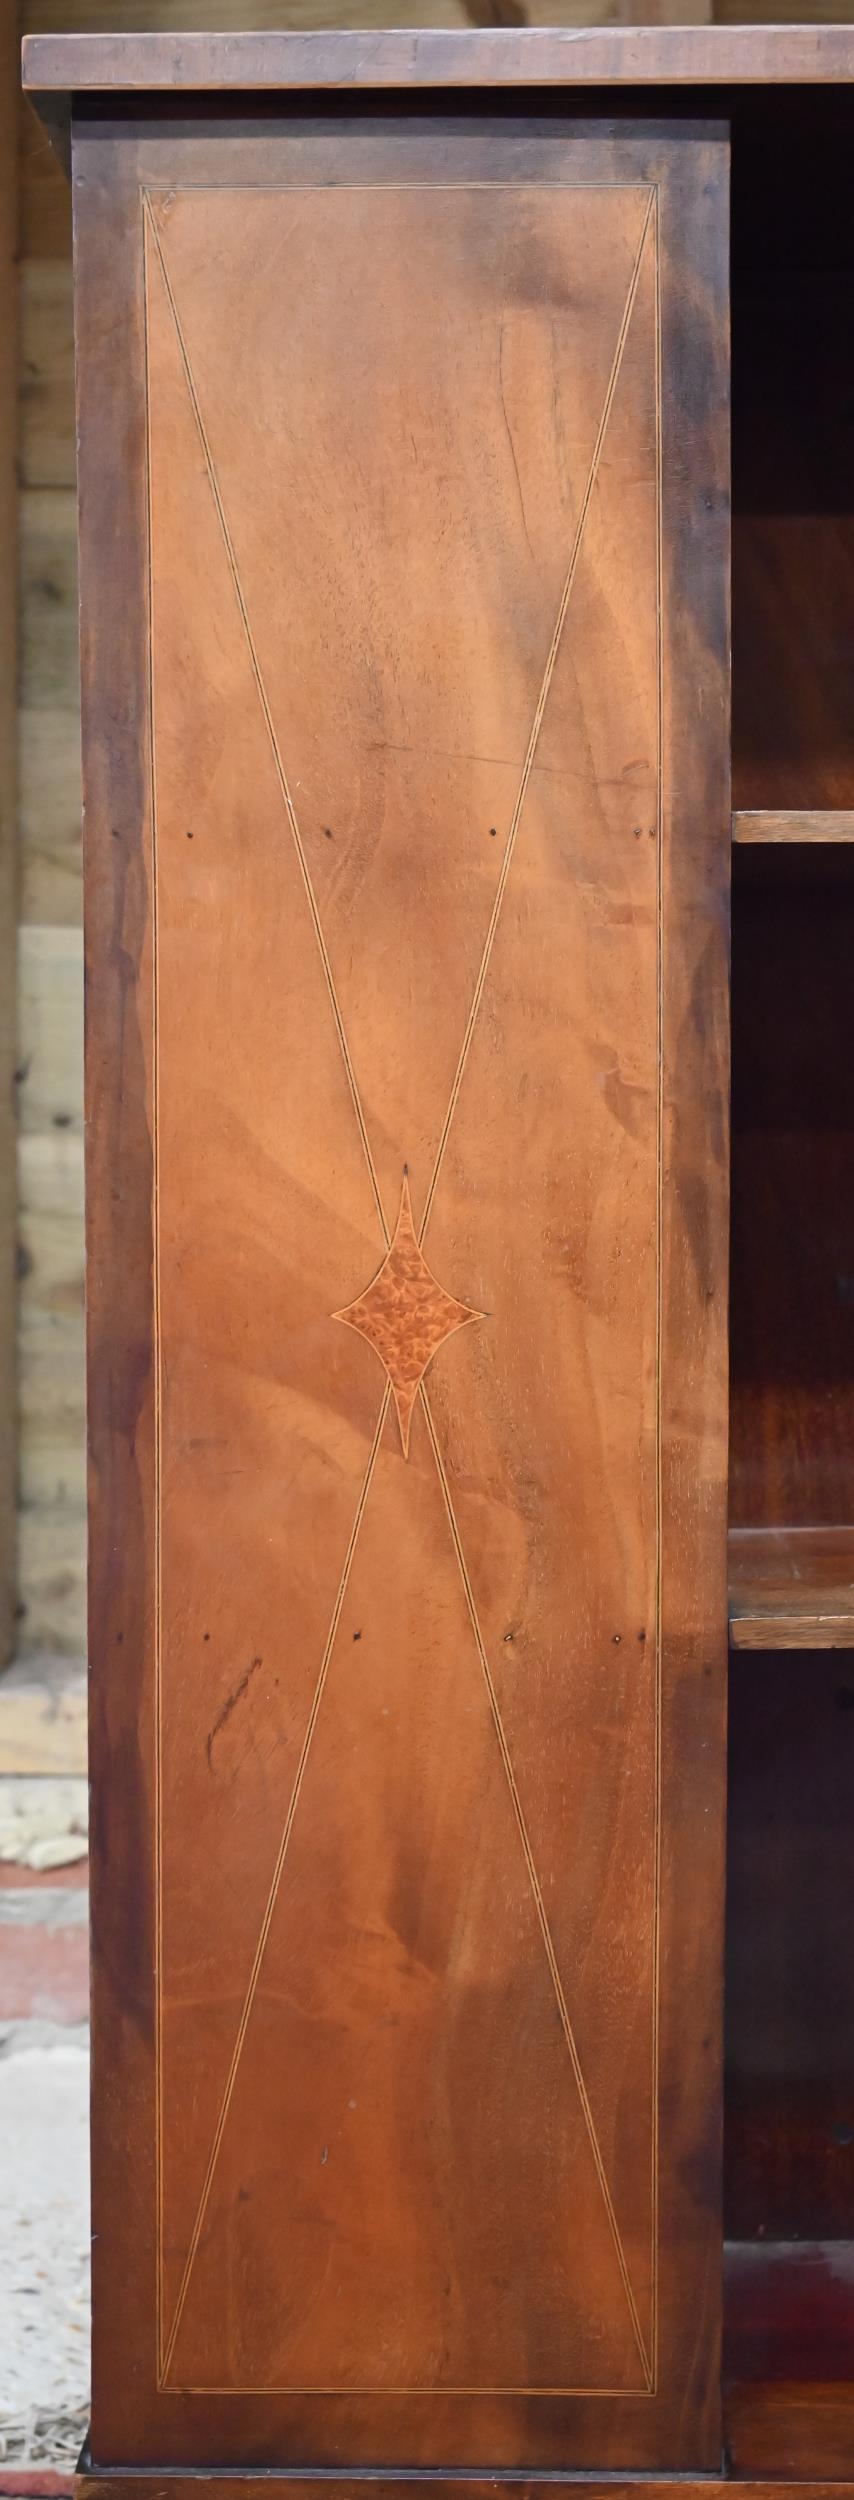 A reproduction mahogany veneered revolving bookcase, 51 cm x 51 cm x 94 cm h - Image 3 of 4